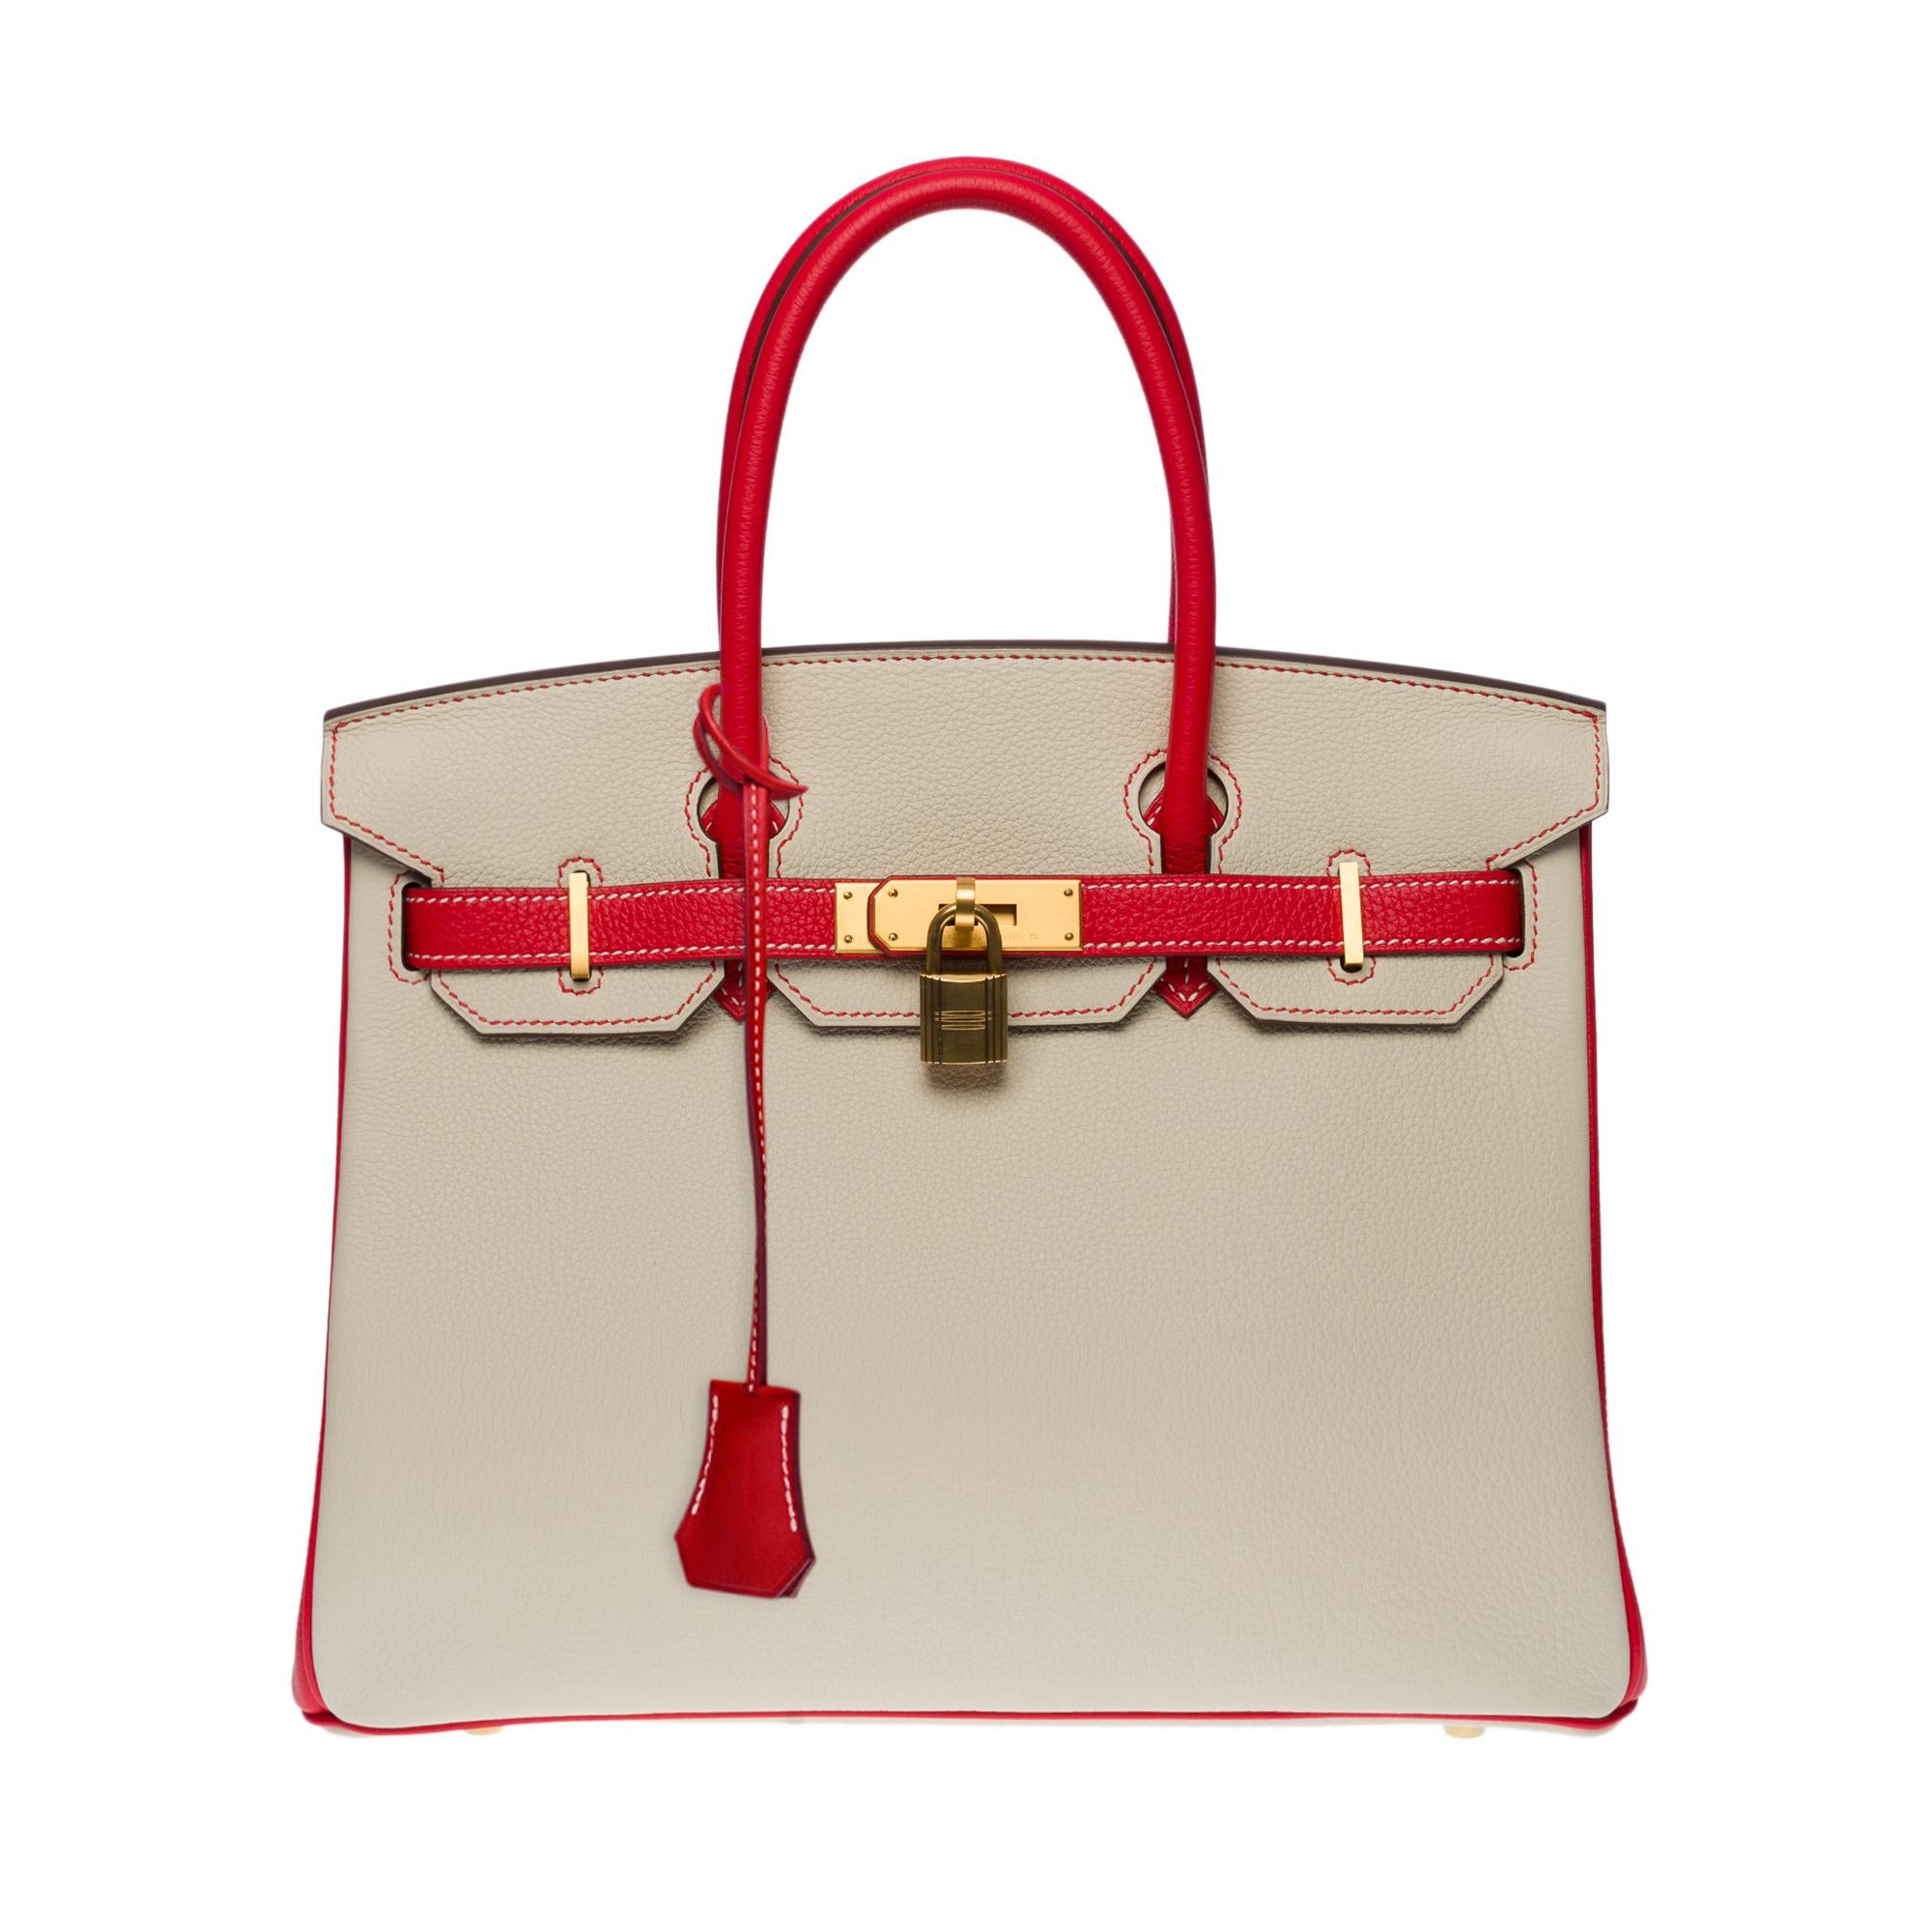 Exceptional & Rare Hermes Birkin 30 Handbag 